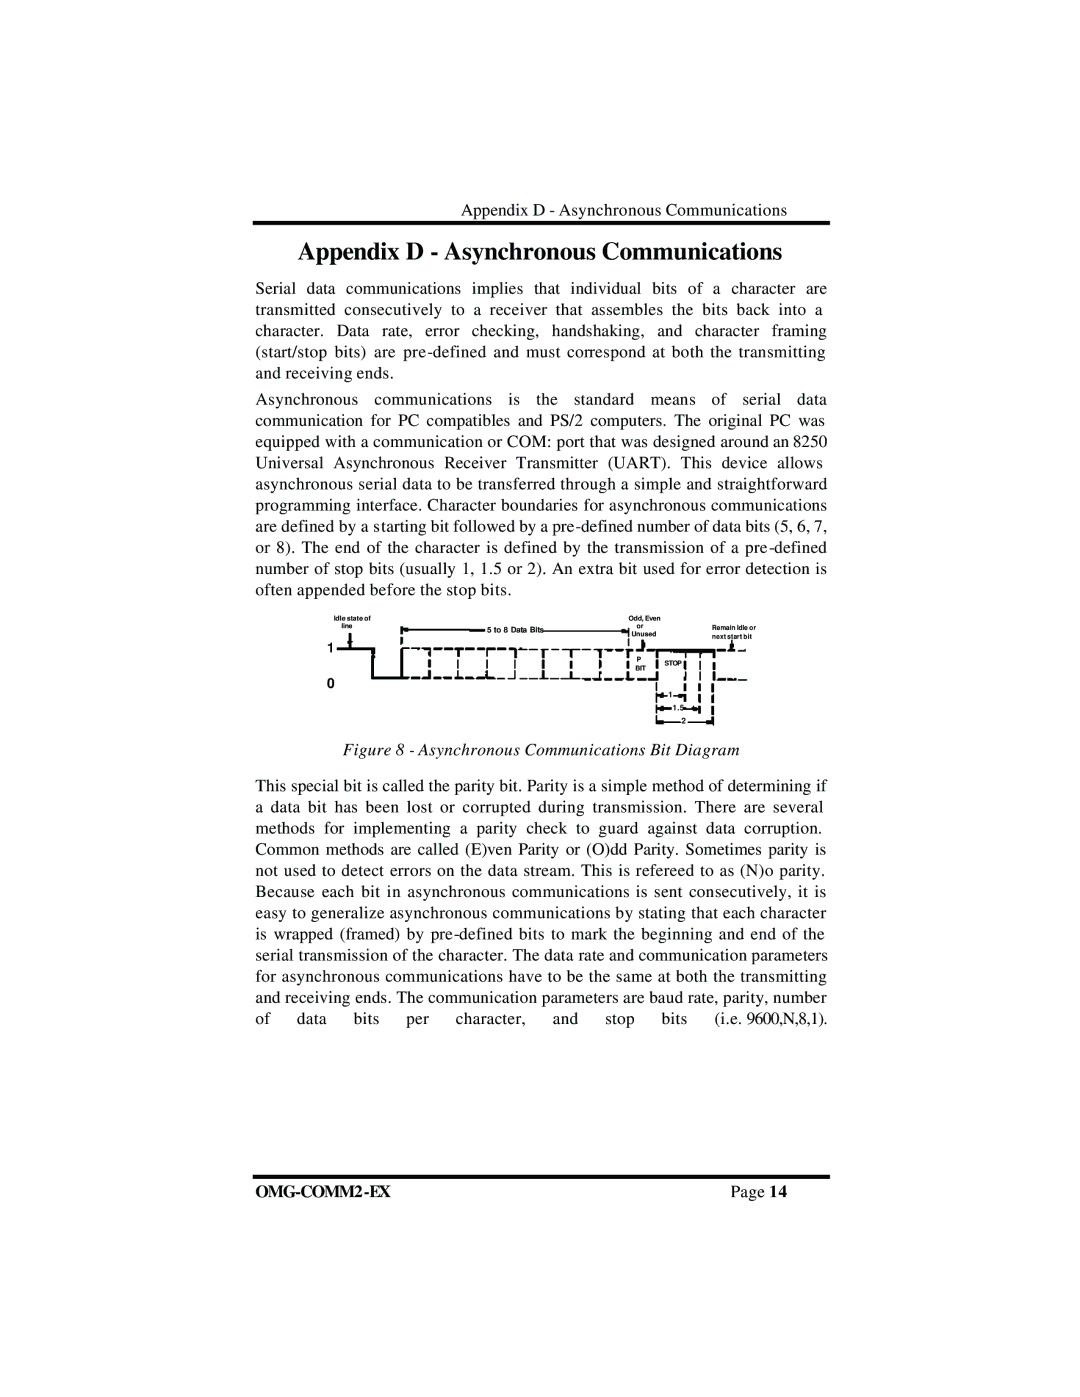 Omega Vehicle Security OMG-COMM2-EX manual Appendix D Asynchronous Communications, Asynchronous Communications Bit Diagram 